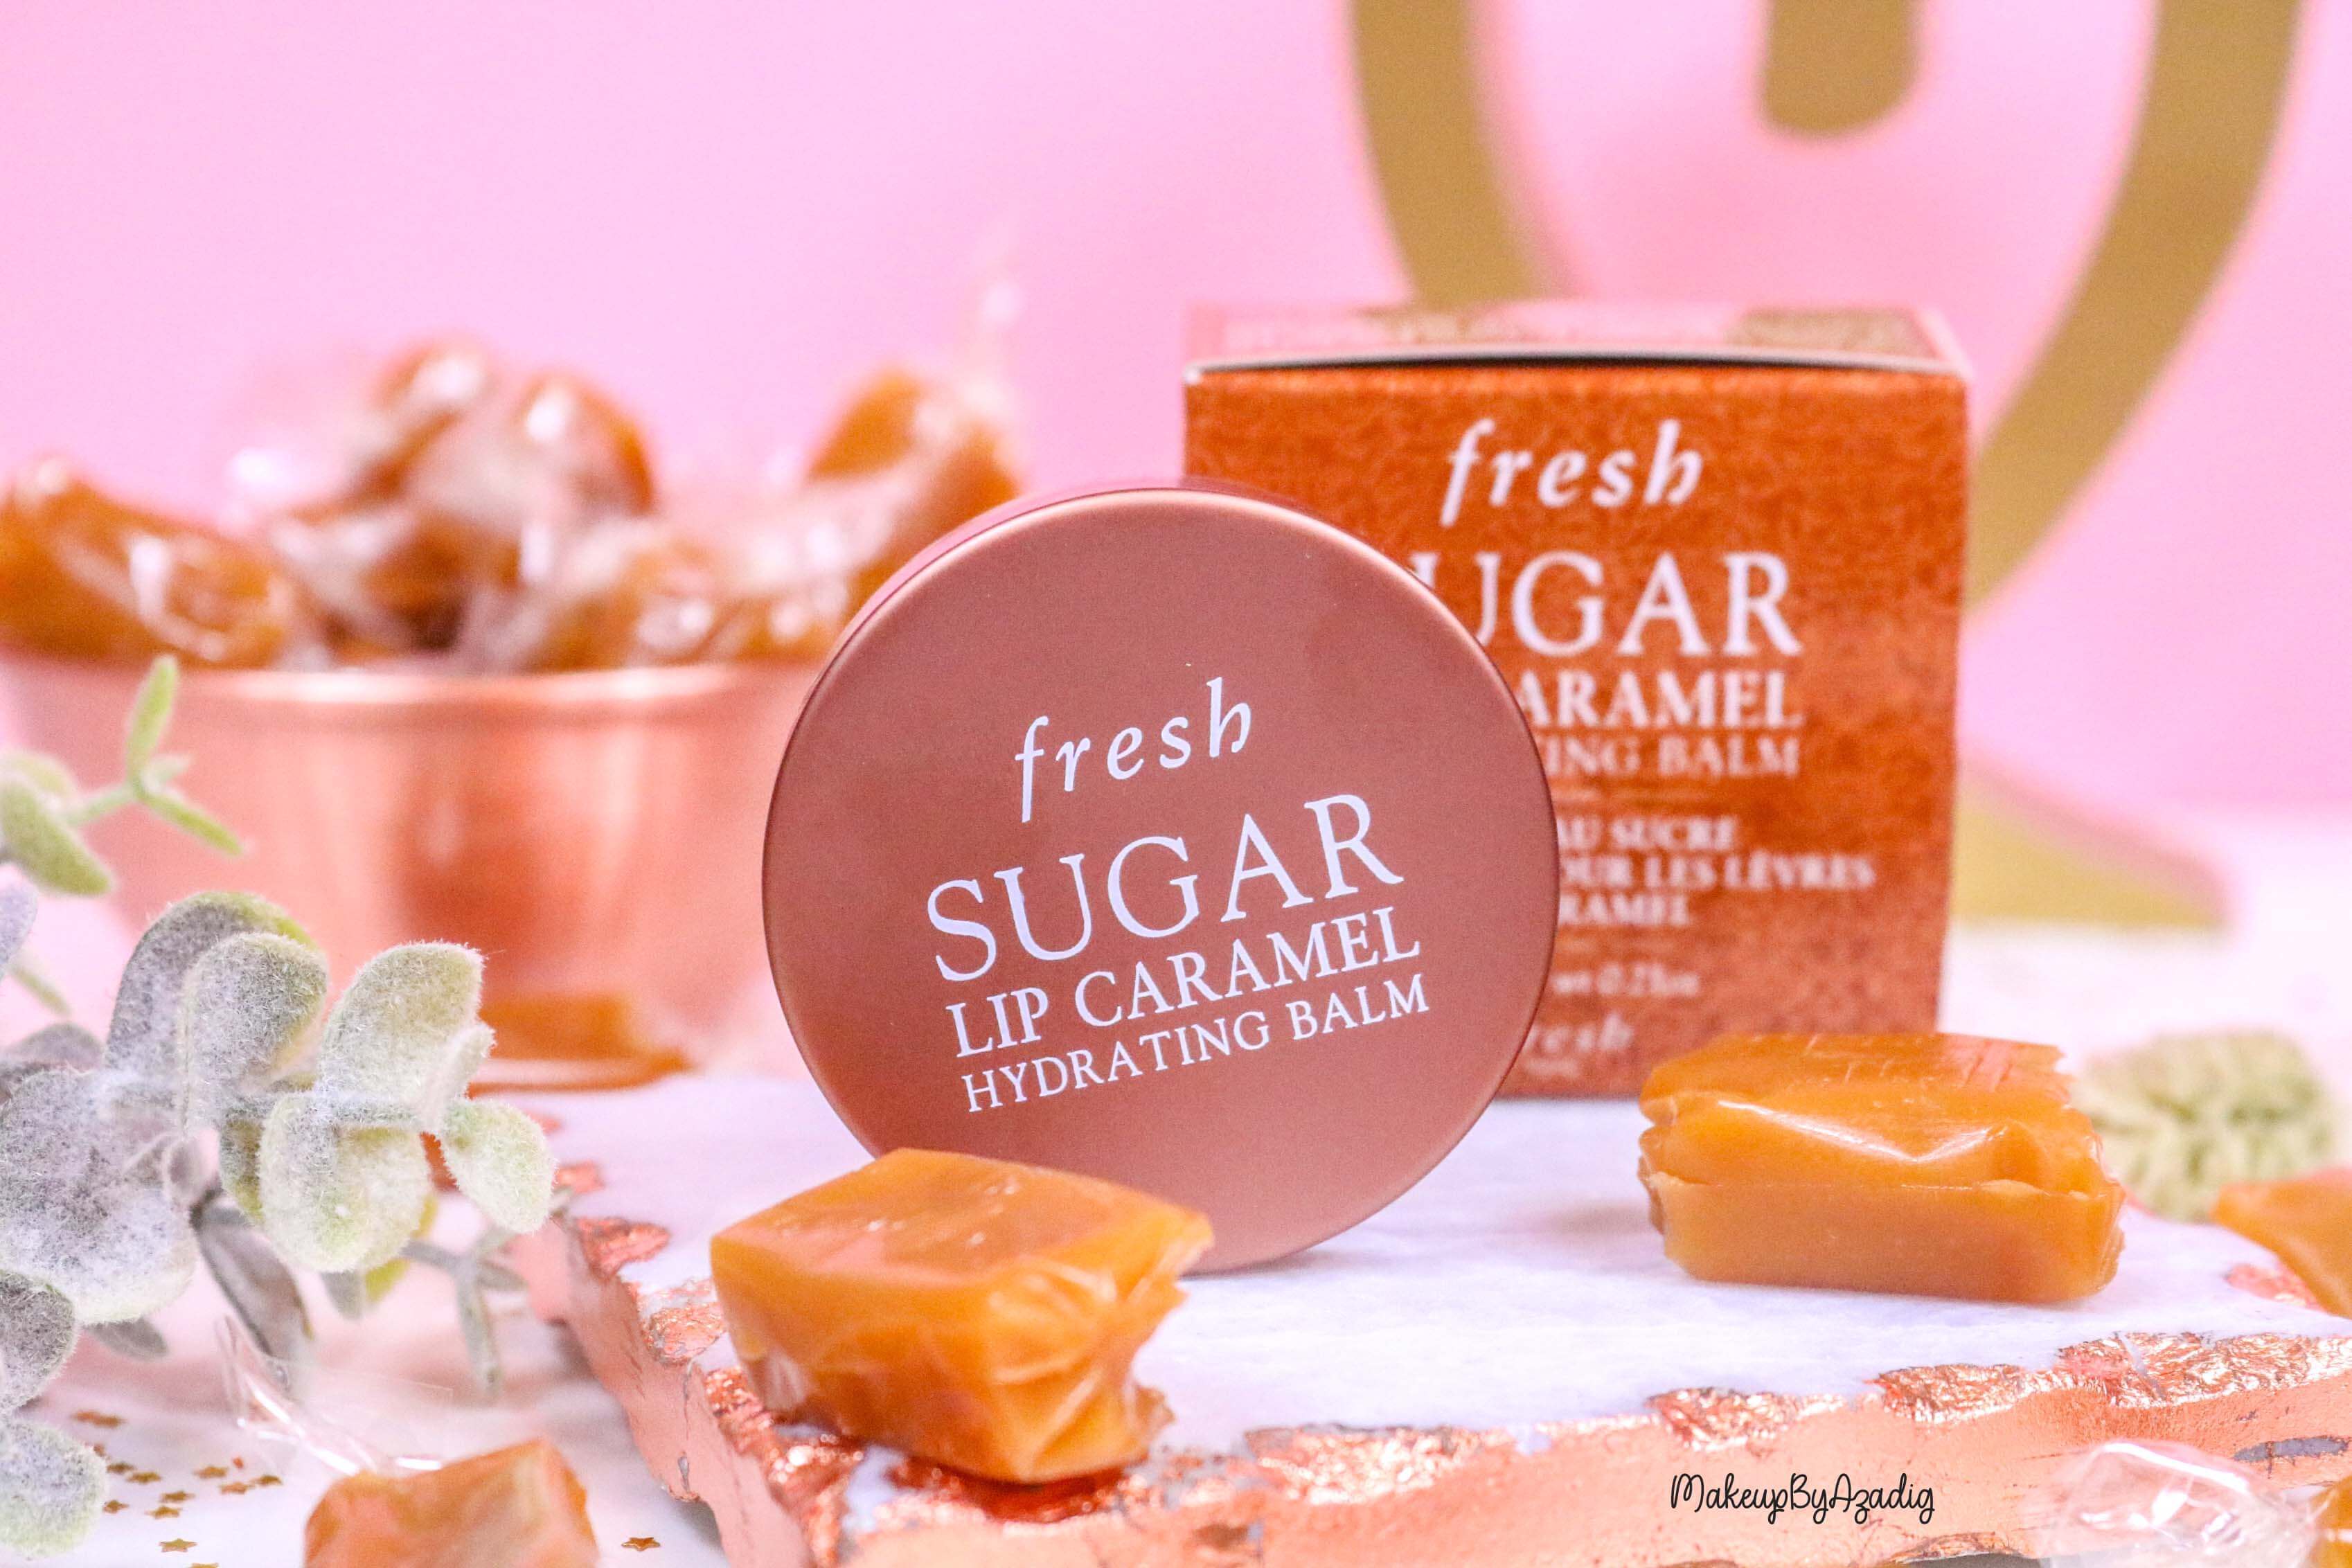 revue-baume-sucre-fresh-beauty-skincare-caramel-sugar-lip-caramel-sephora-makeupbyazadig-avis-prix-balm-peche